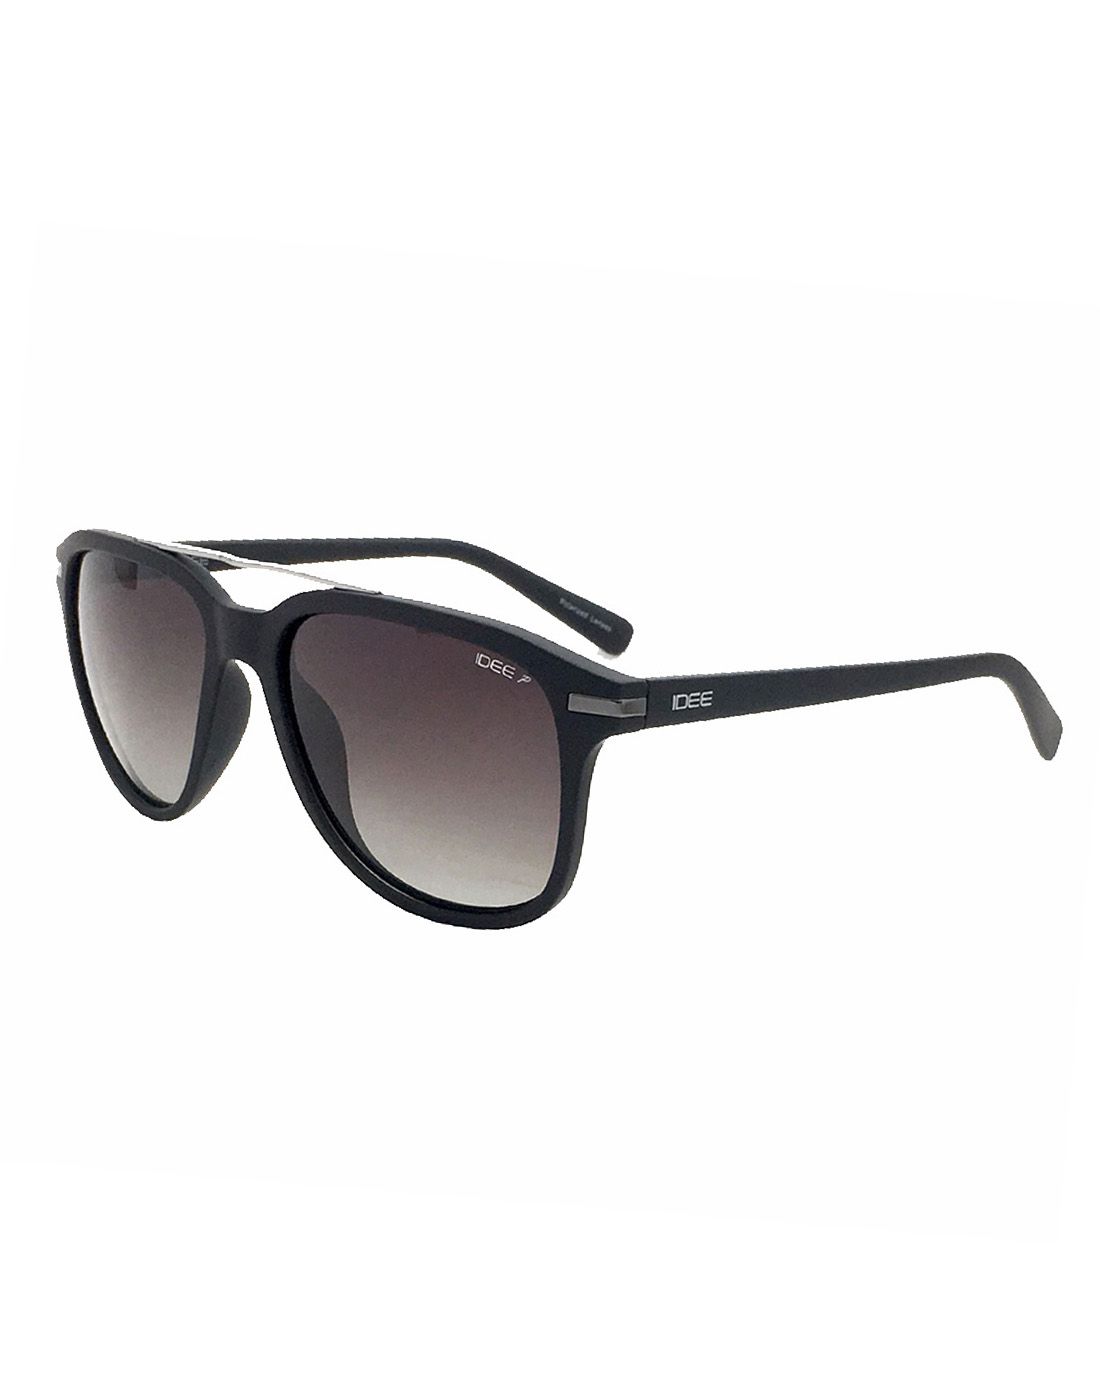 Idee Grey Wayfarer Sunglasses S SDL 1 40bd6